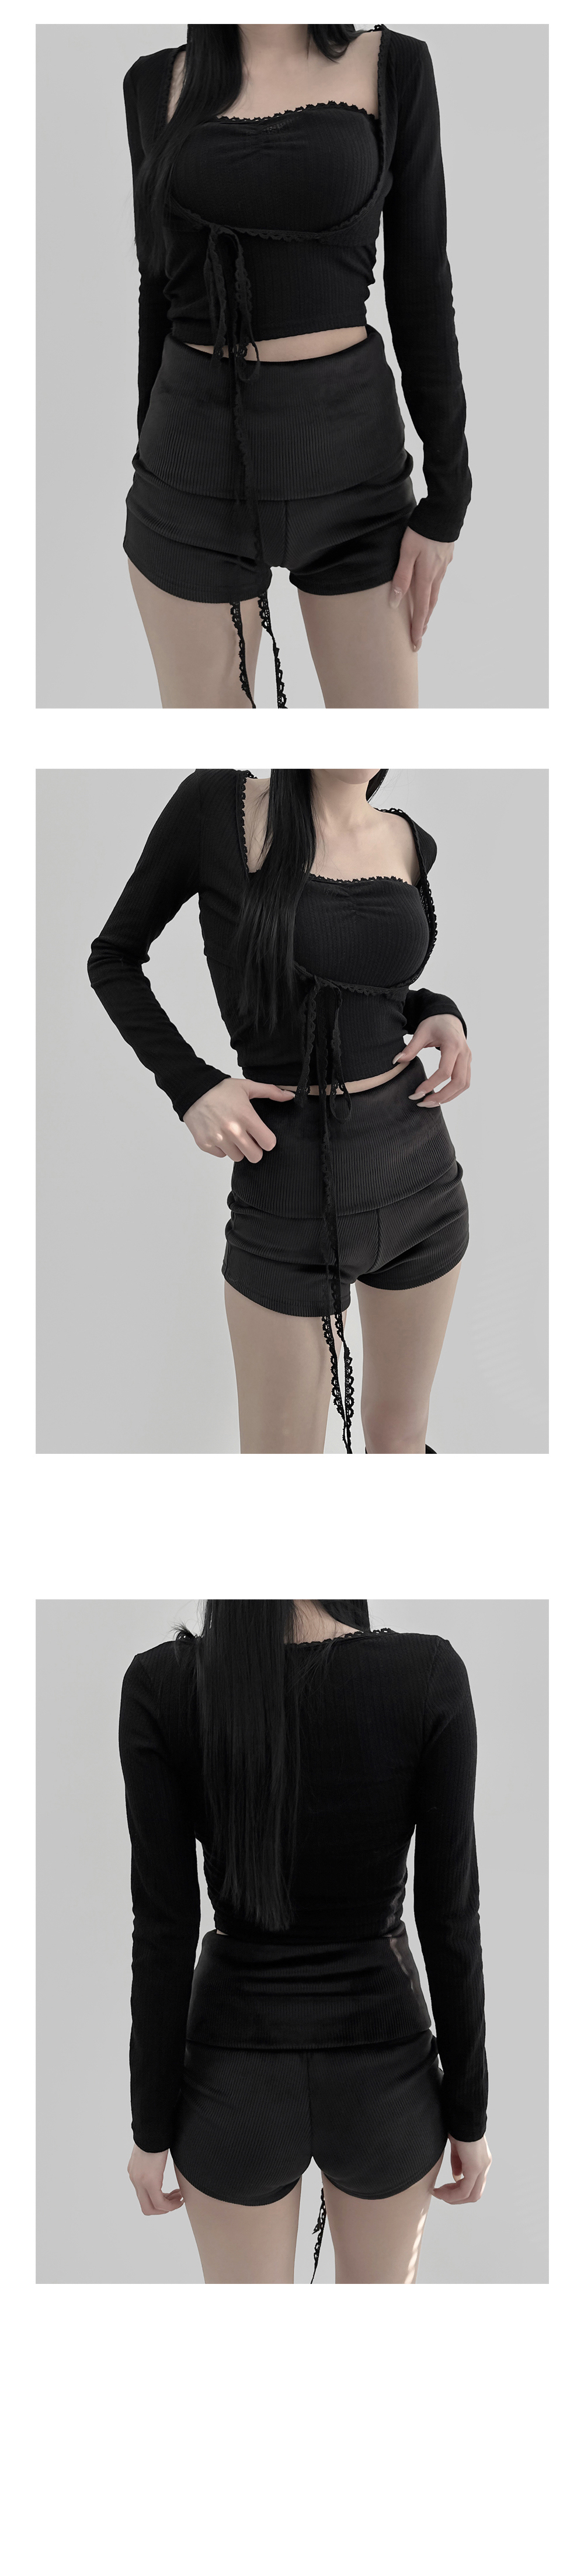 mini skirt charcoal color image-S1L14